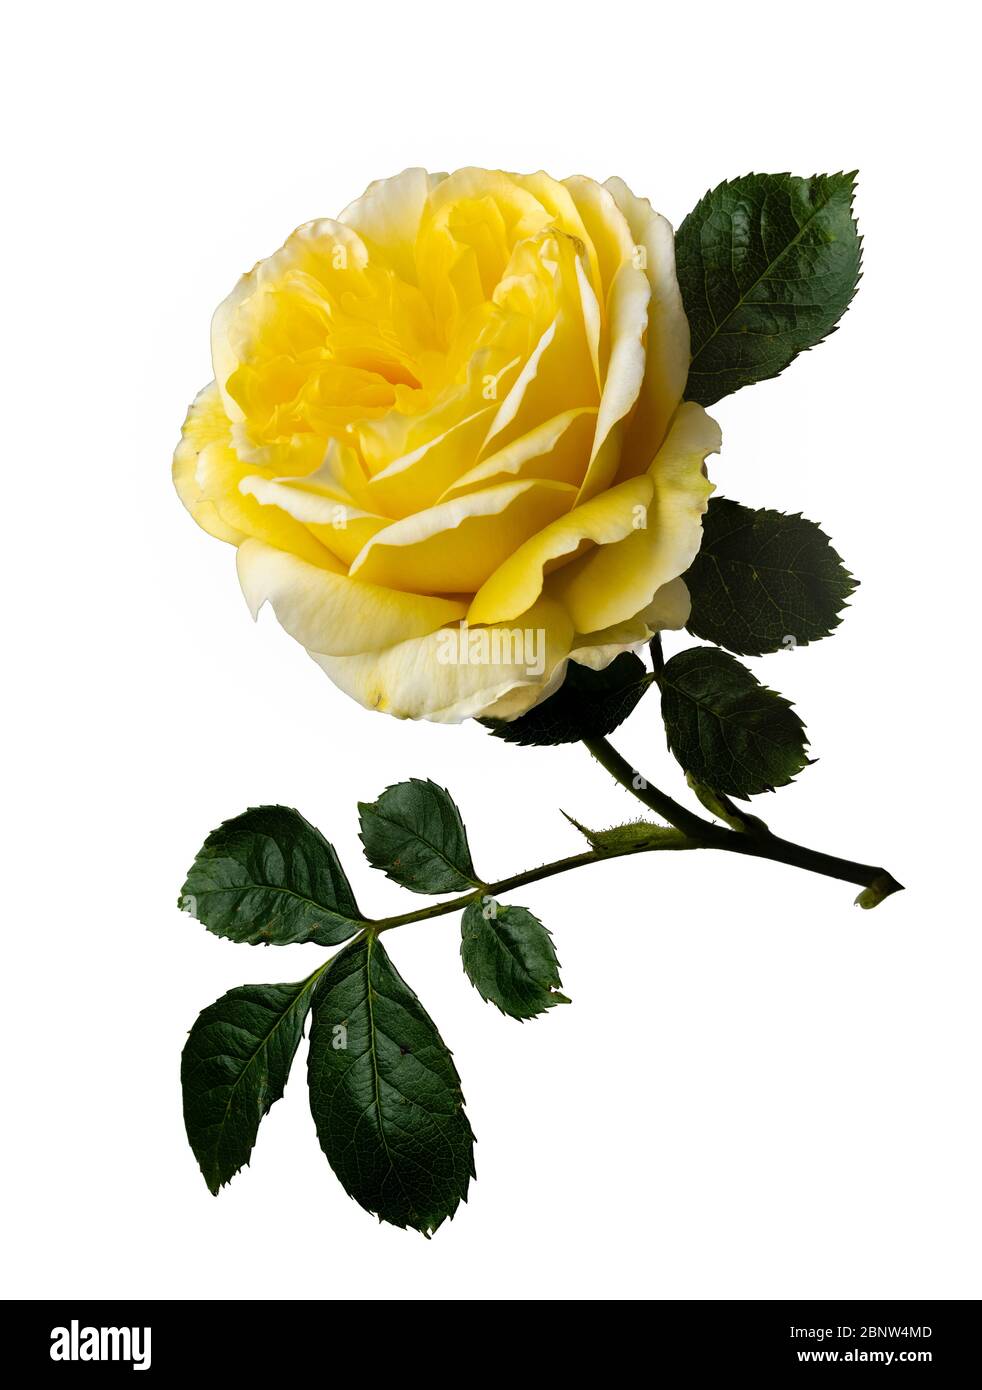 Single flower and leaves of the David Austin English rose, Rosa ;Graham Thomas' on a white background Stock Photo